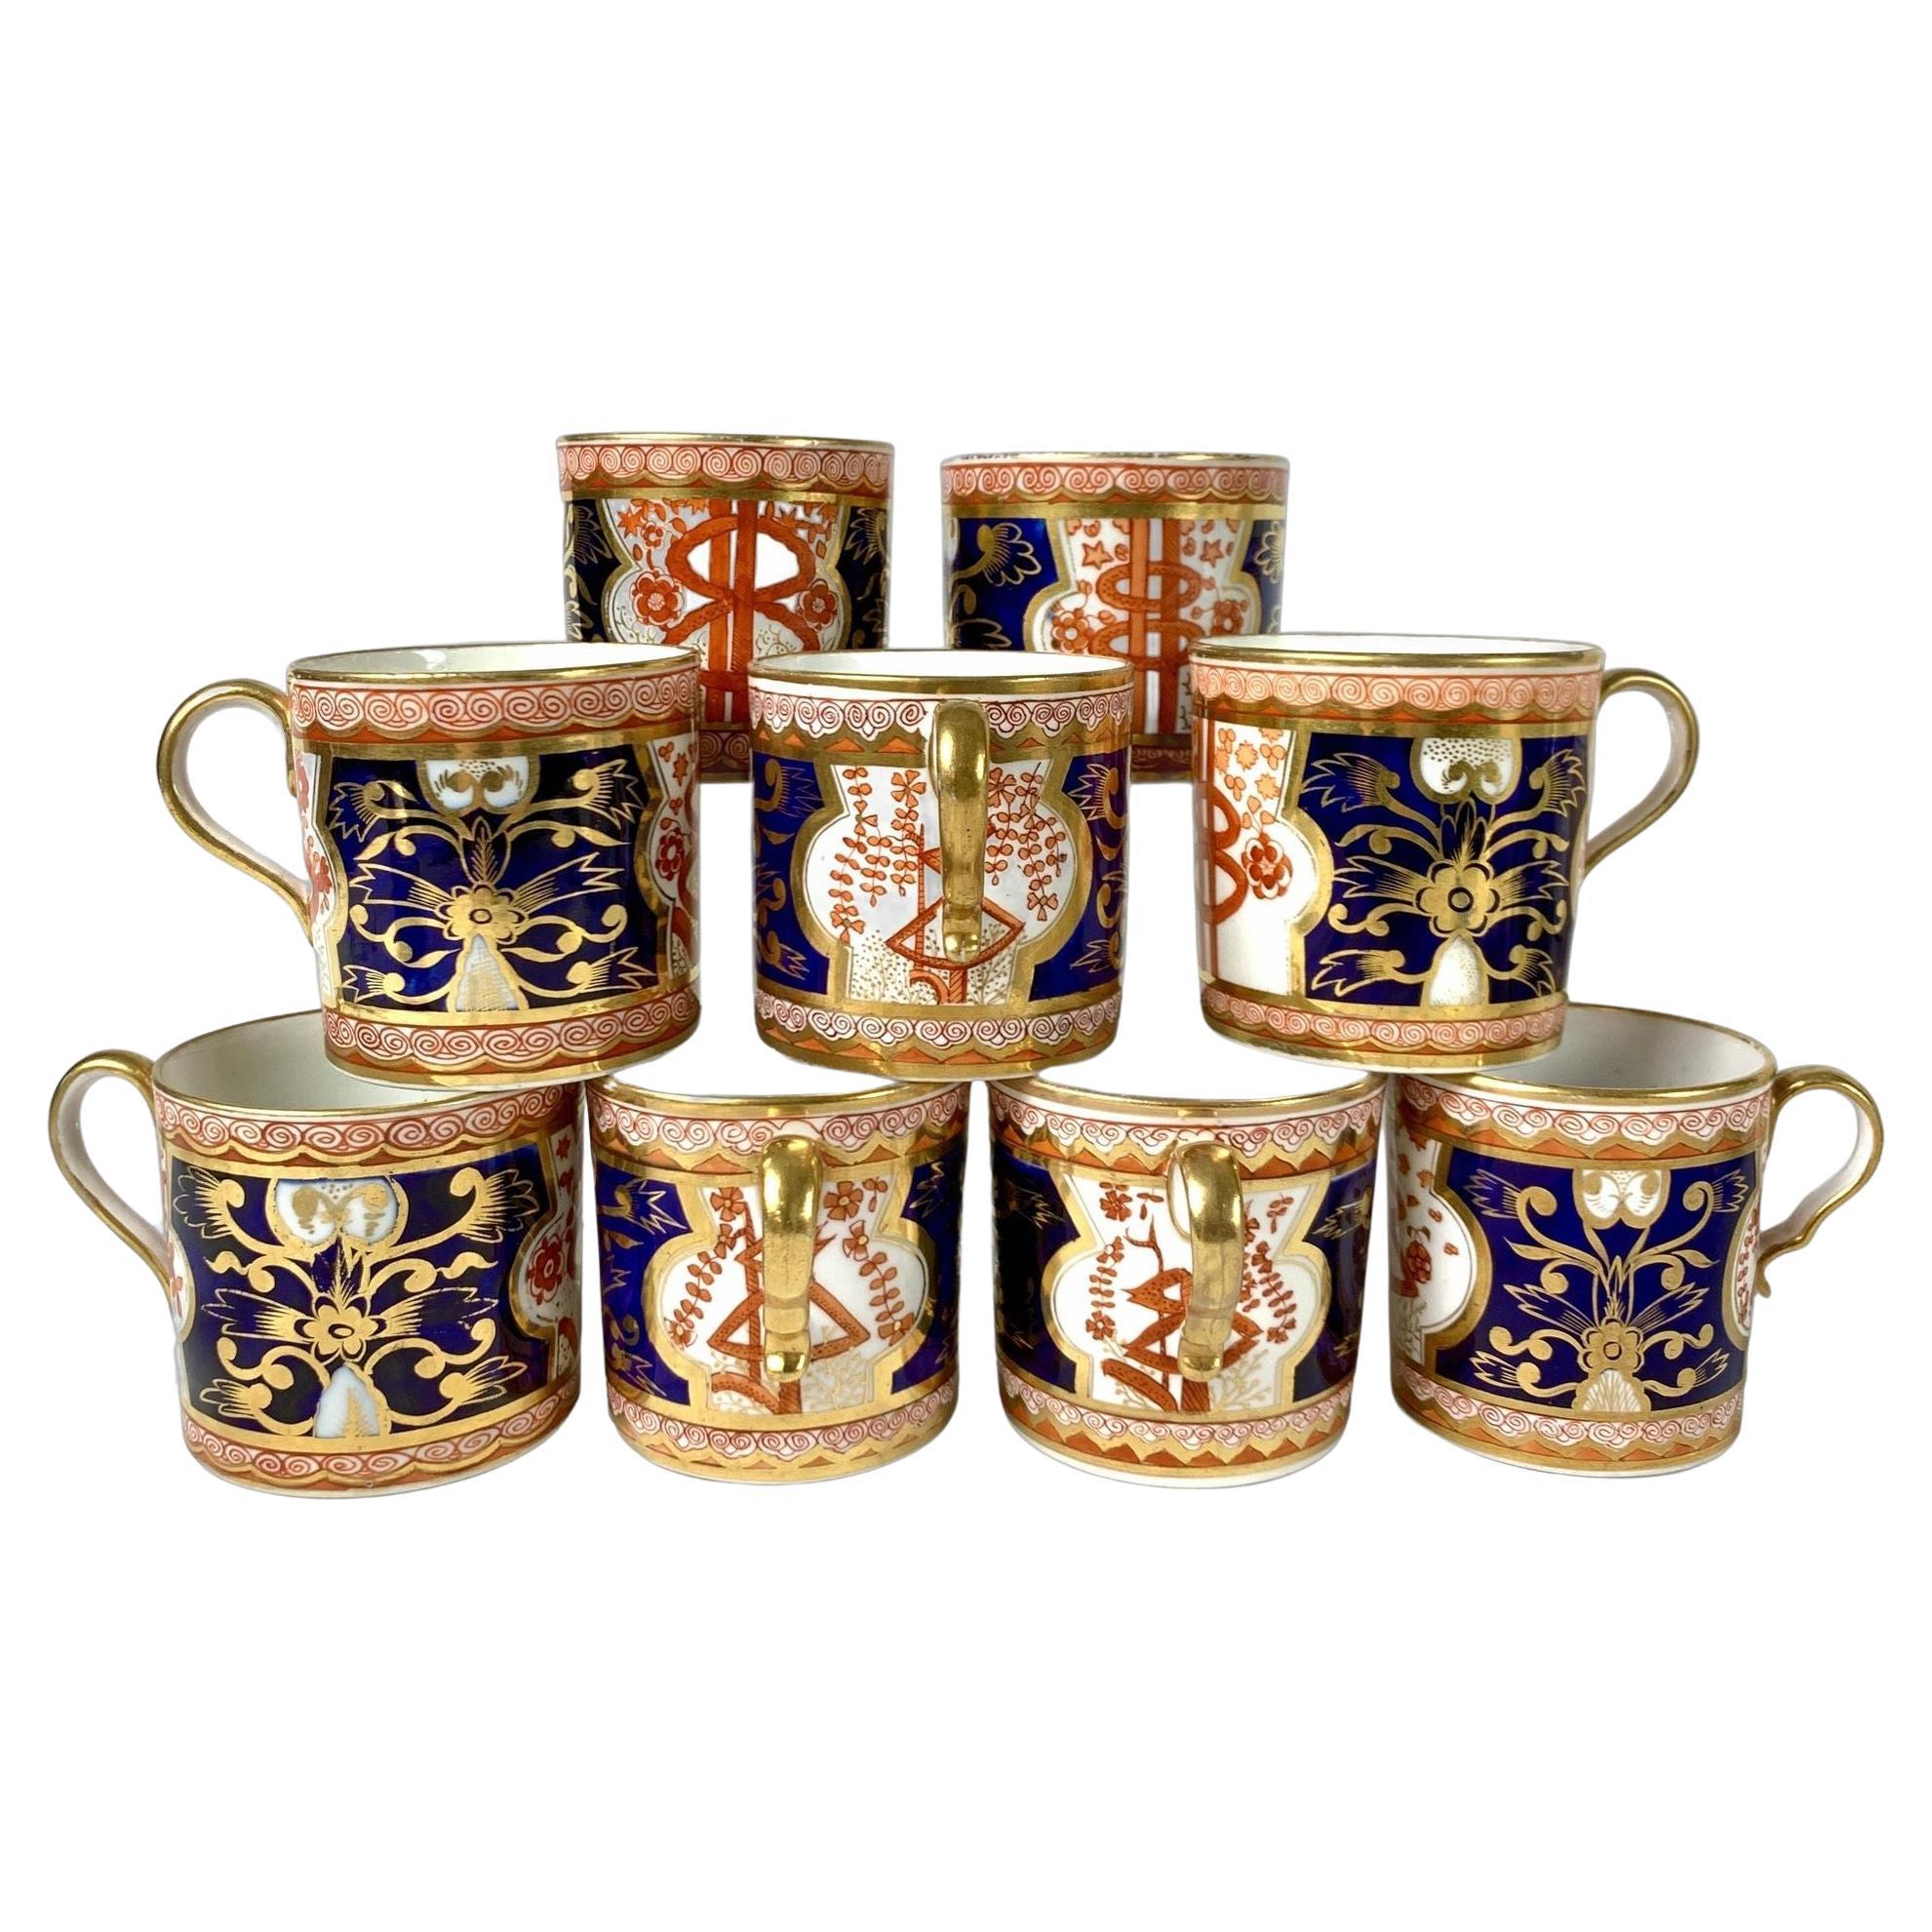 Nine Spode Dollar Pattern Coffee Cups England Circa 1820